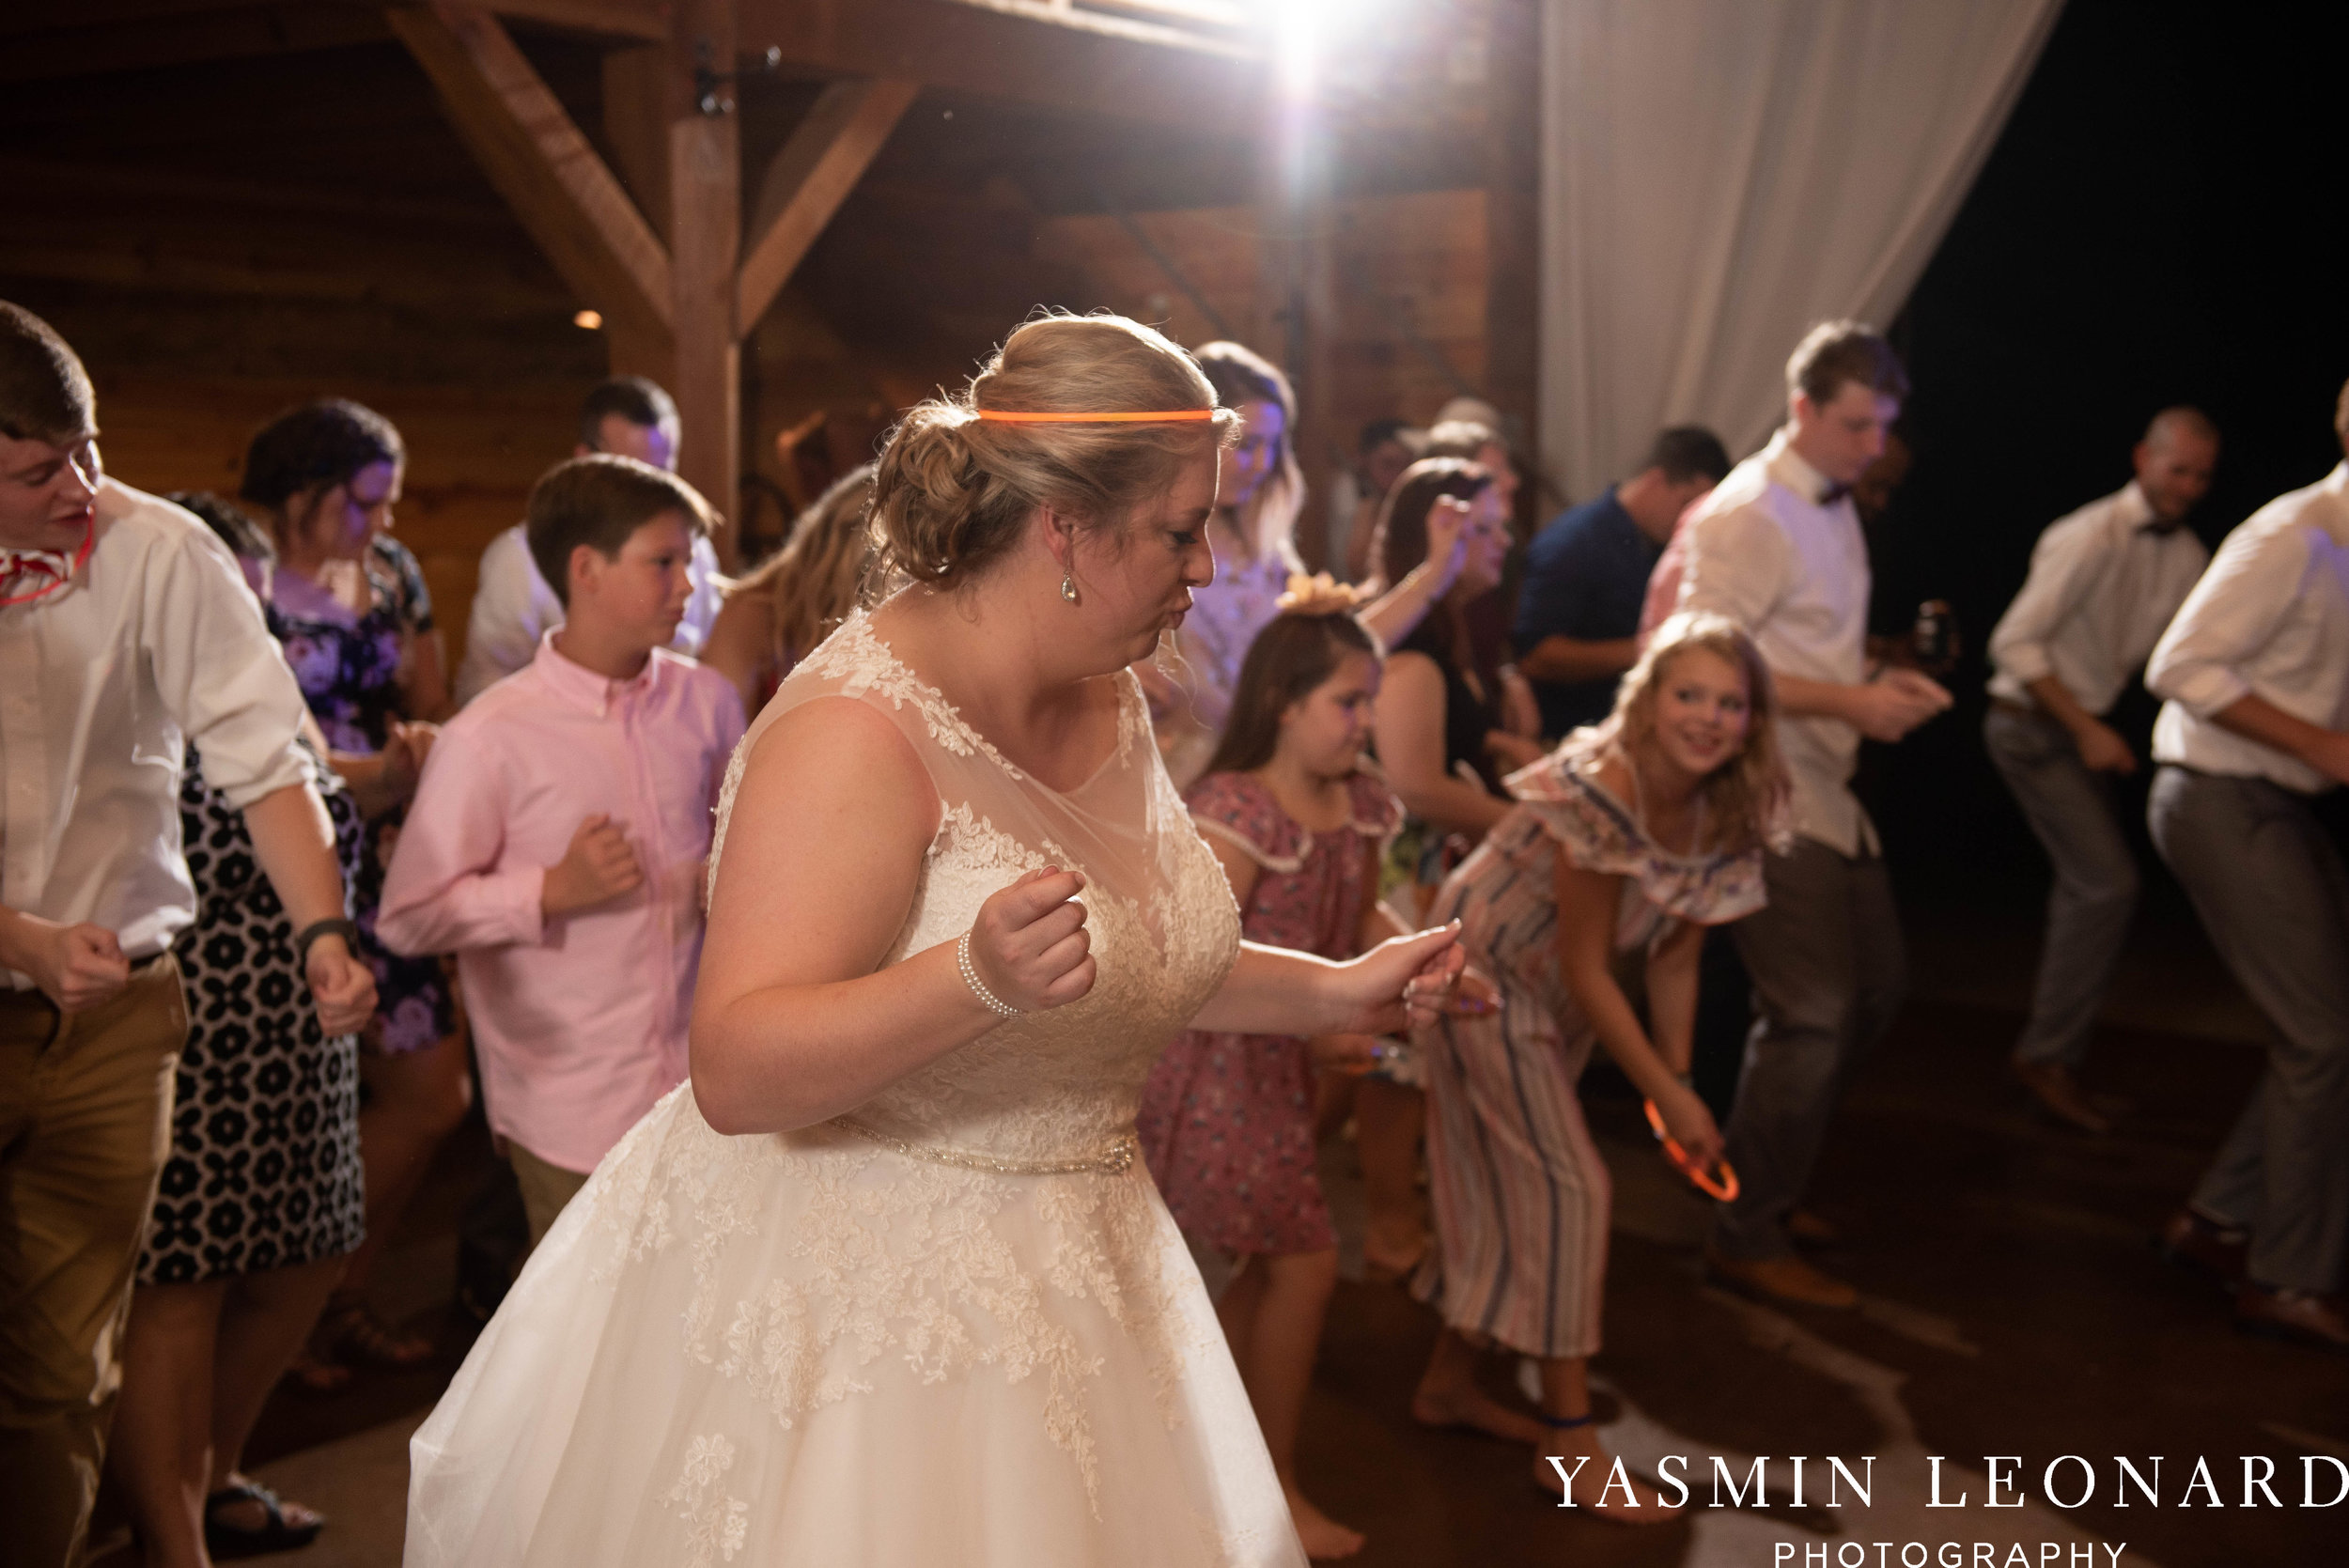 Danner Farms - NC Wedding Venues - NC Barns - Statesville NC - NC Wedding Photographer - High Point Wedding Photographer - Yasmin Leonard Photography-93.jpg